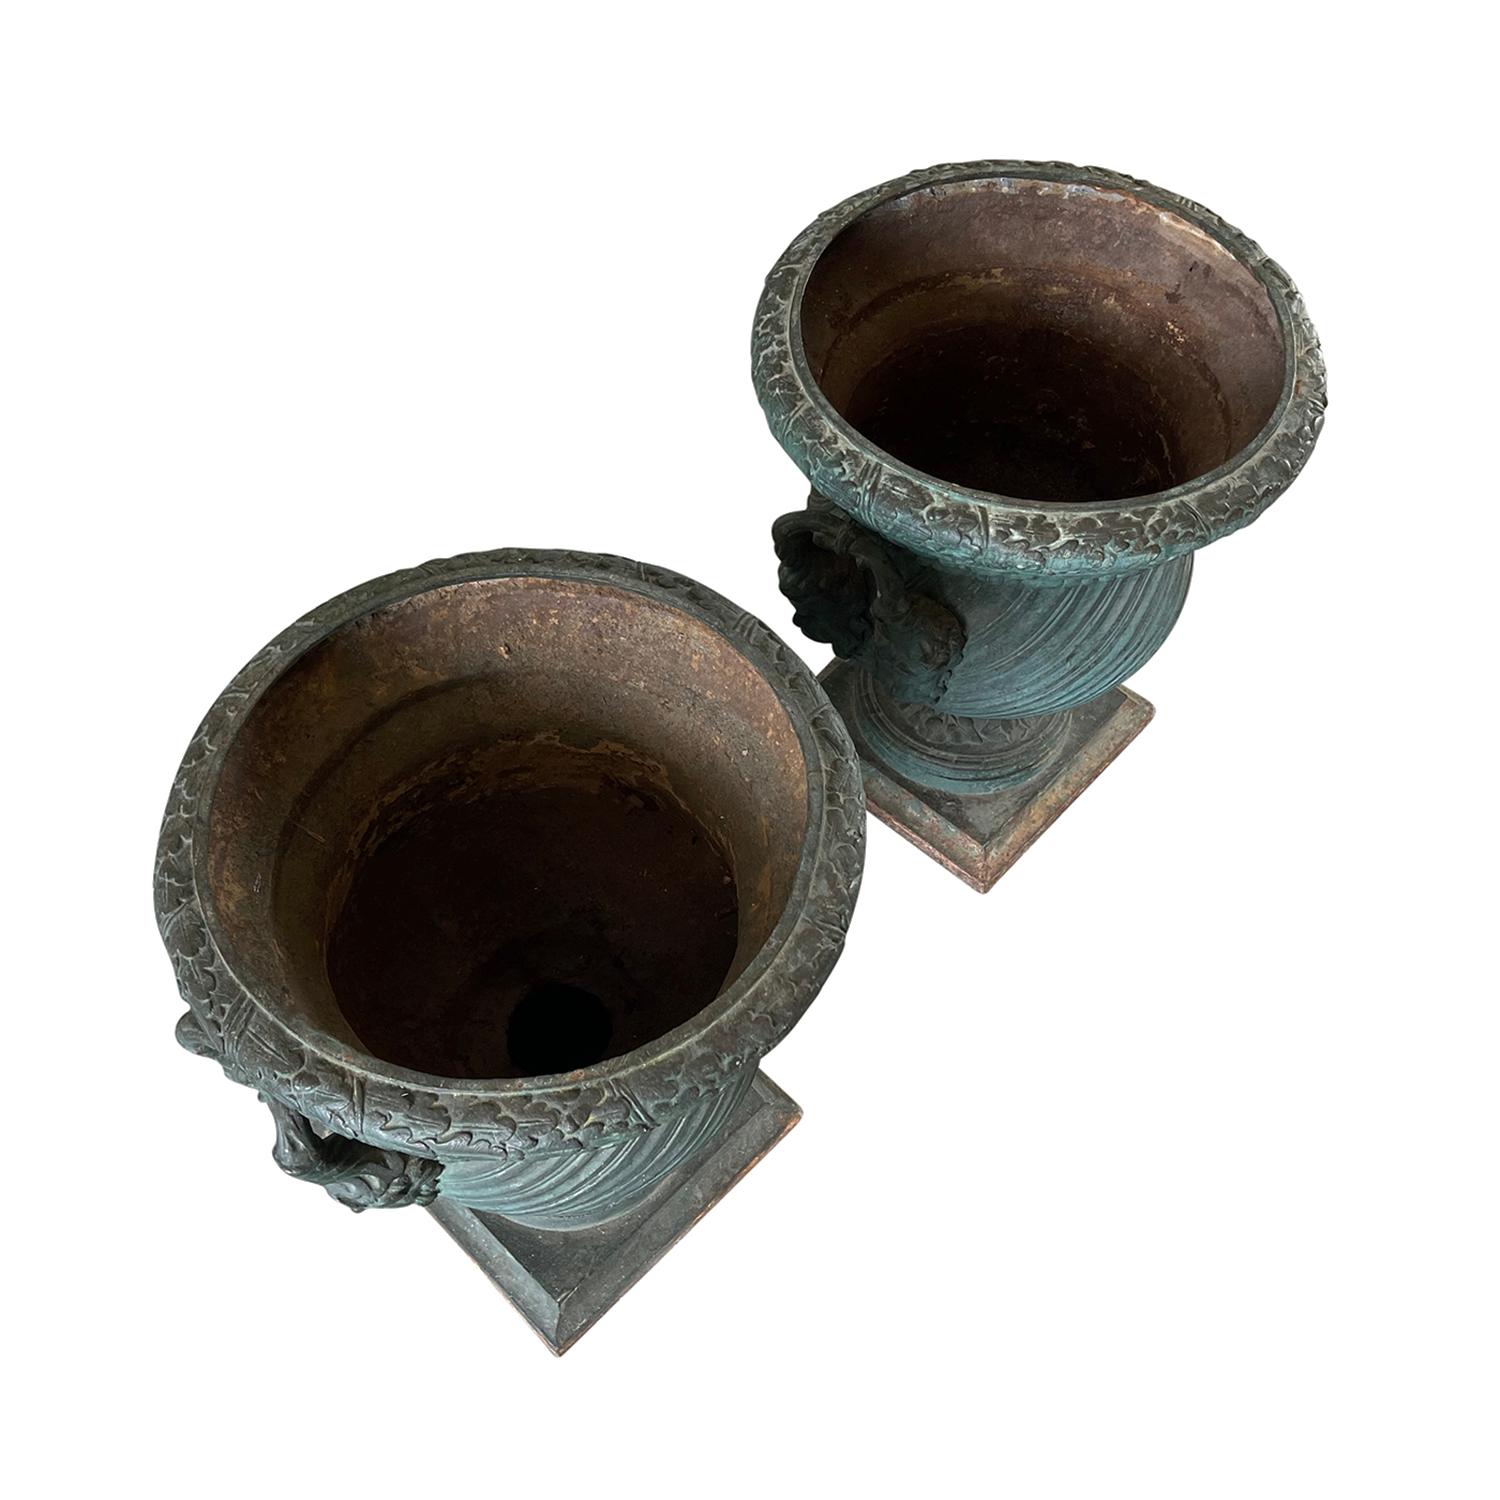 19th Century Pair of Ile de France Urns - Antique French Cast Iron Planters For Sale 1